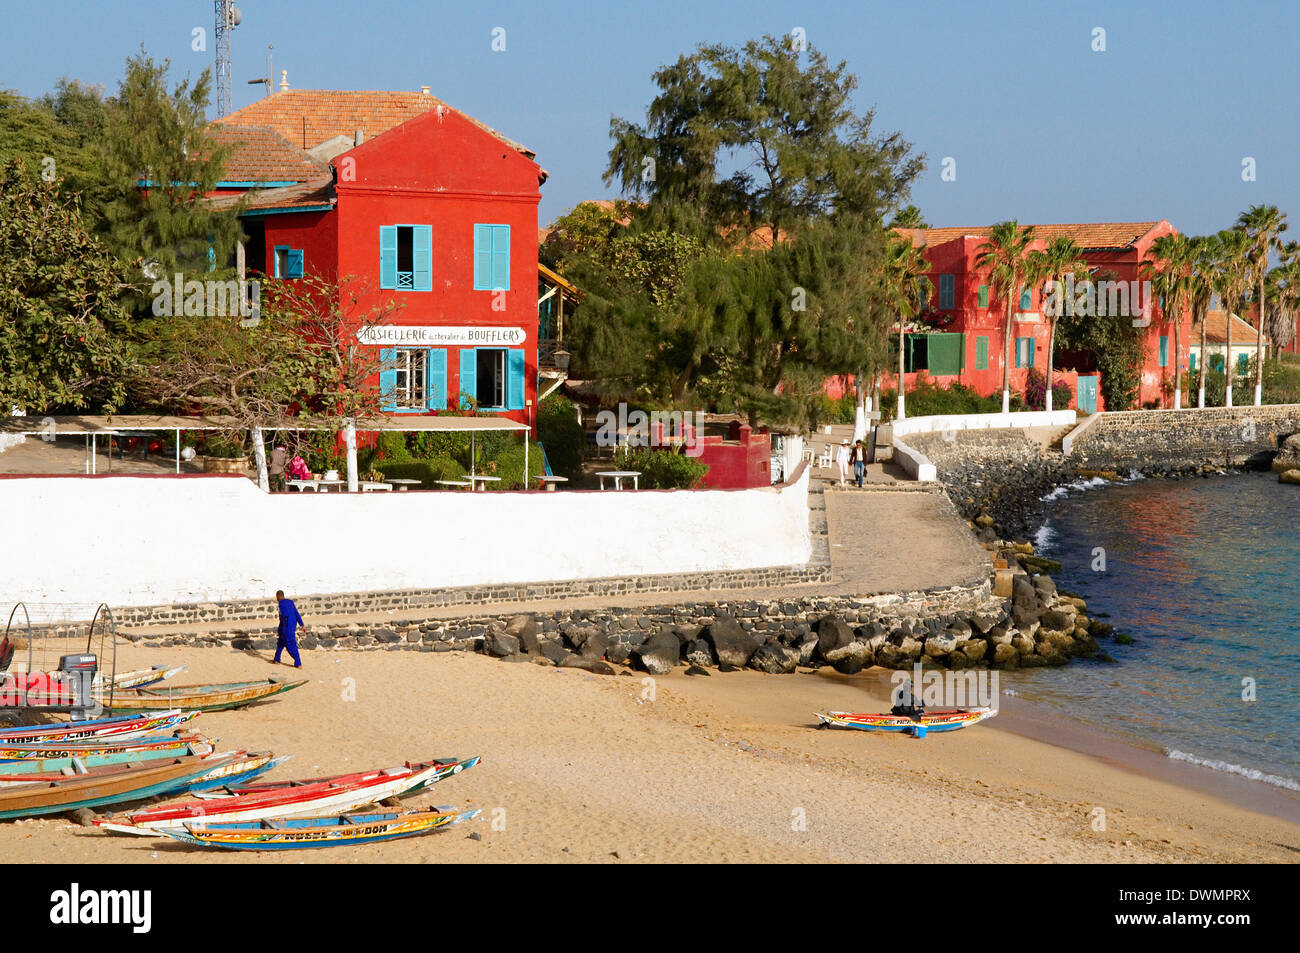 The Beach, Island of Goree (Ile de Goree), UNESCO World Heritage Site, Senegal, West Africa, Africa Stock Photo